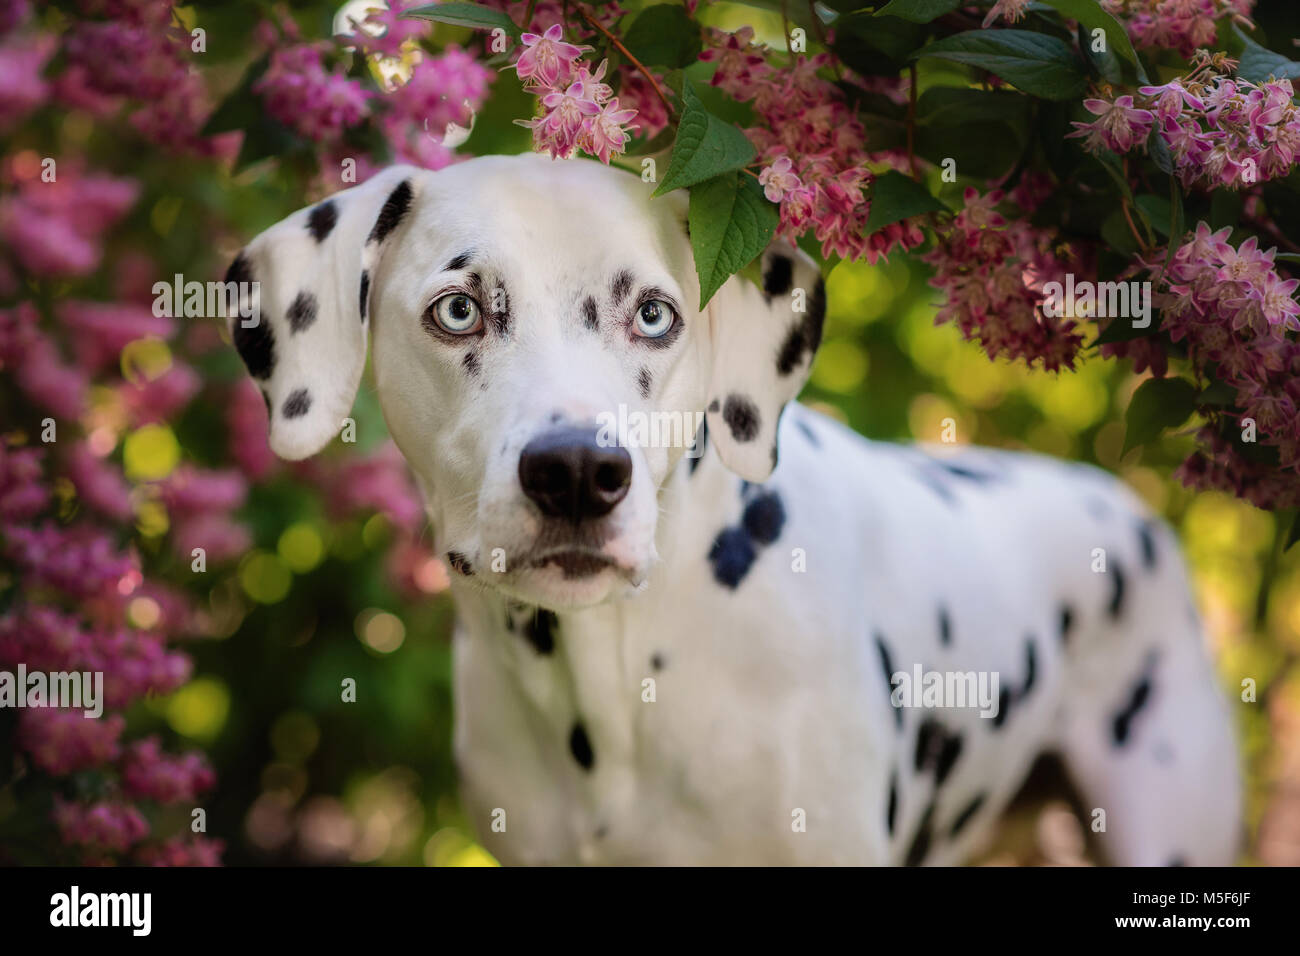 Dalmatian dog under flowers Stock Photo